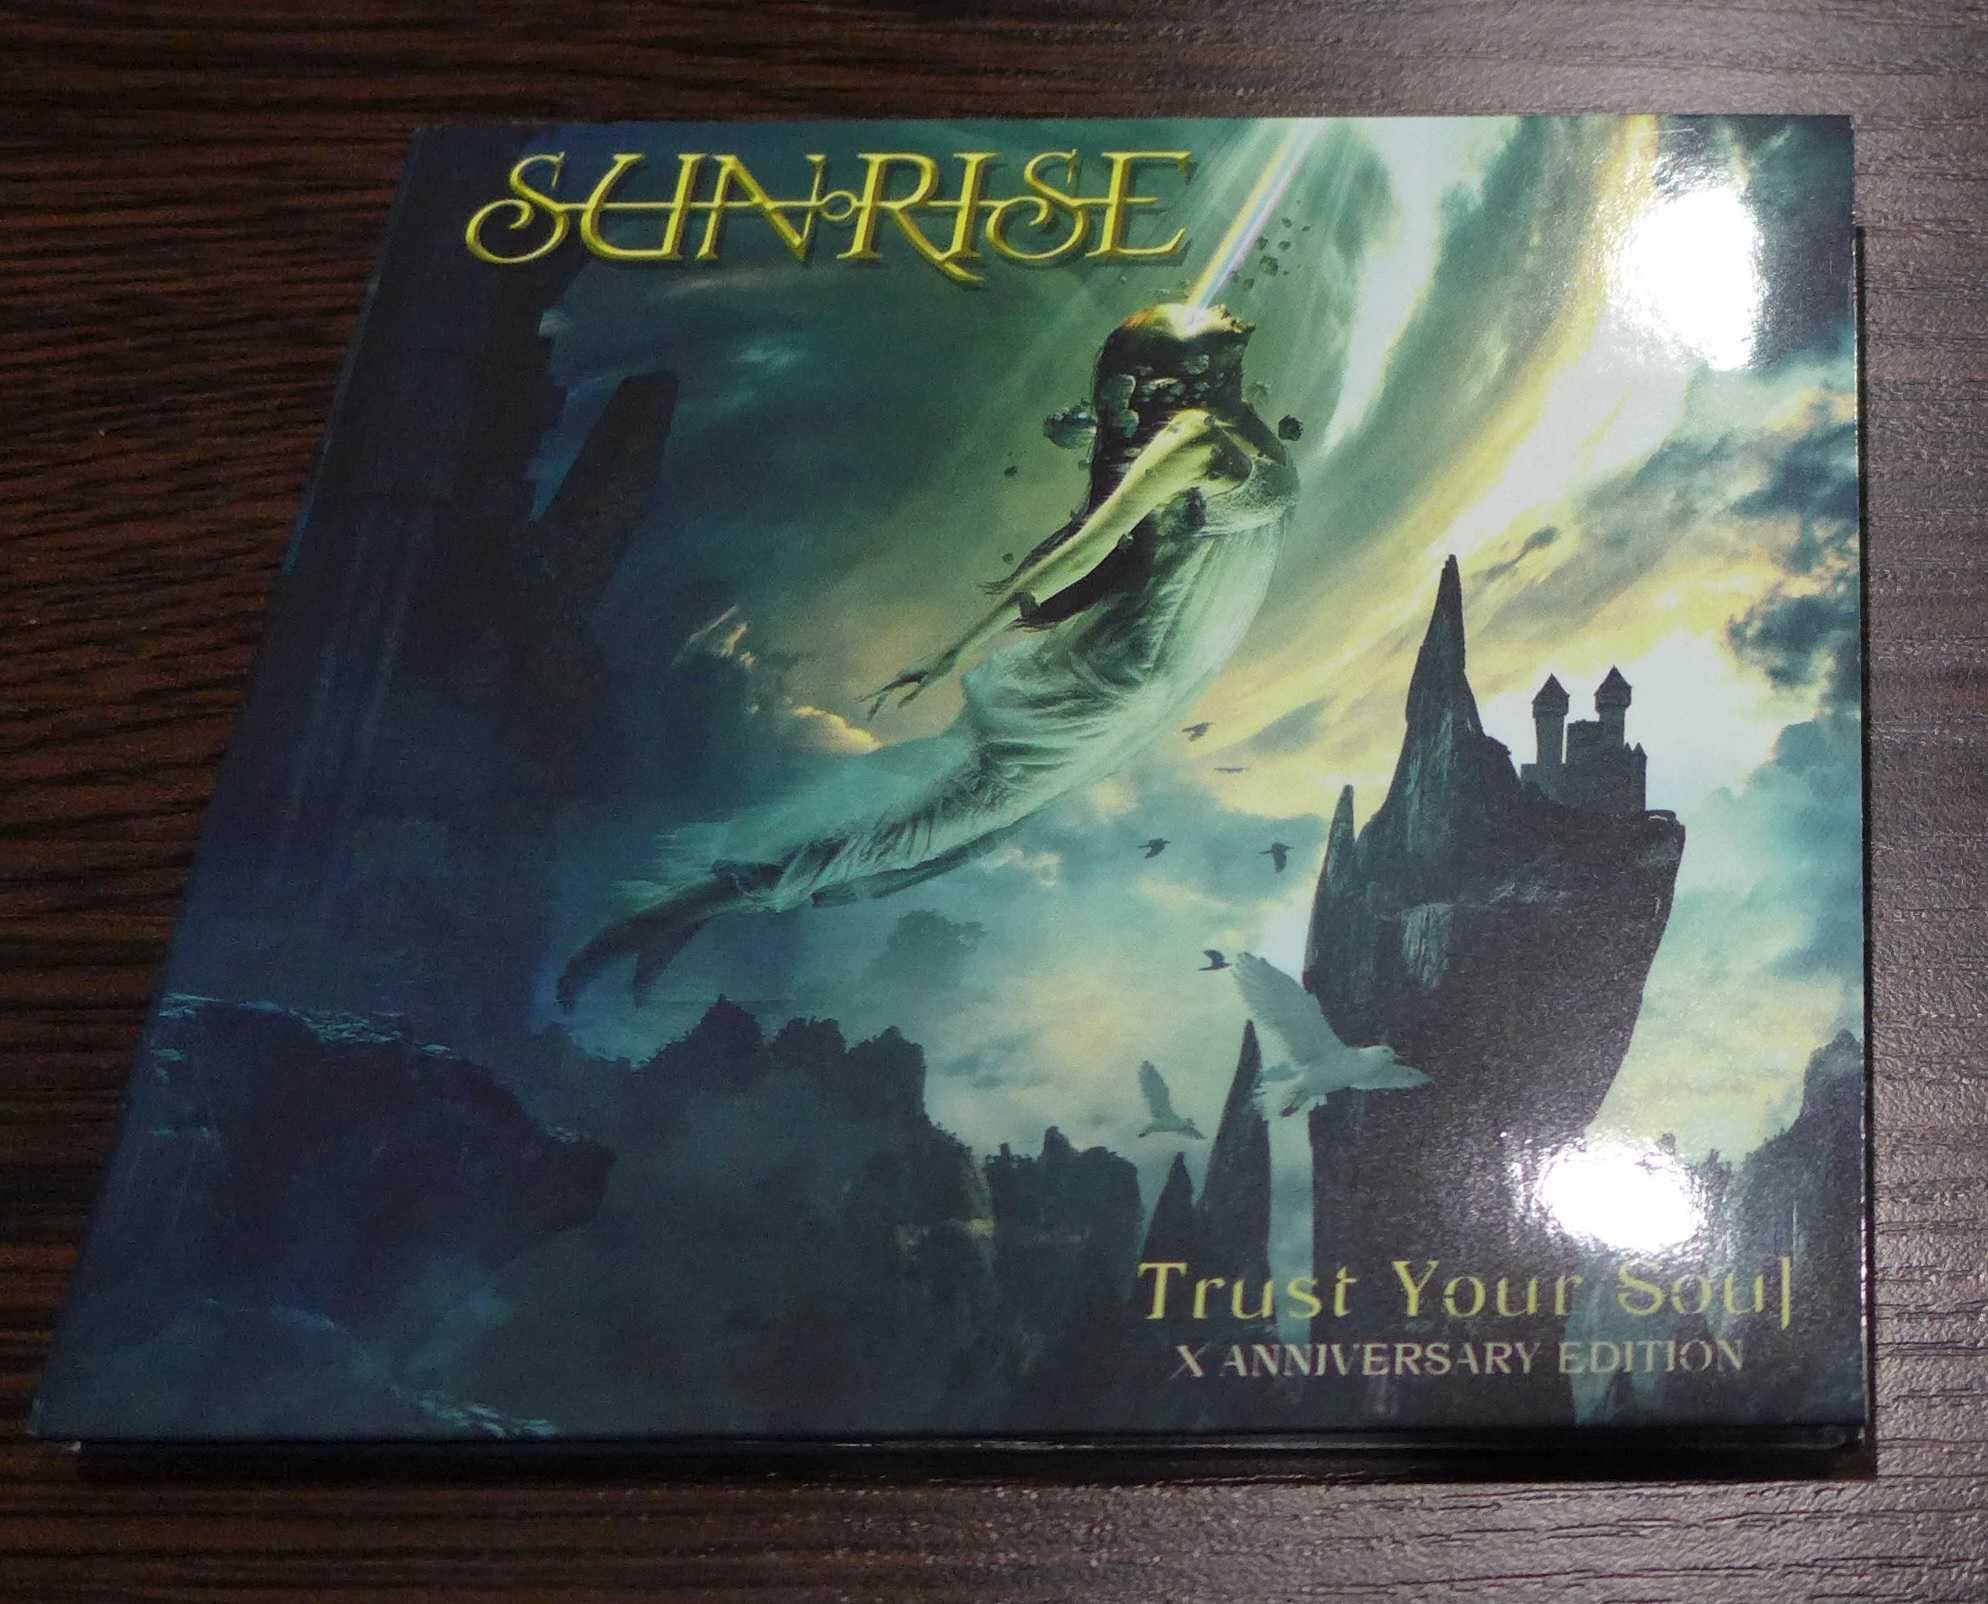 SUNRISE - Trust Your Soul - X anniversary edition